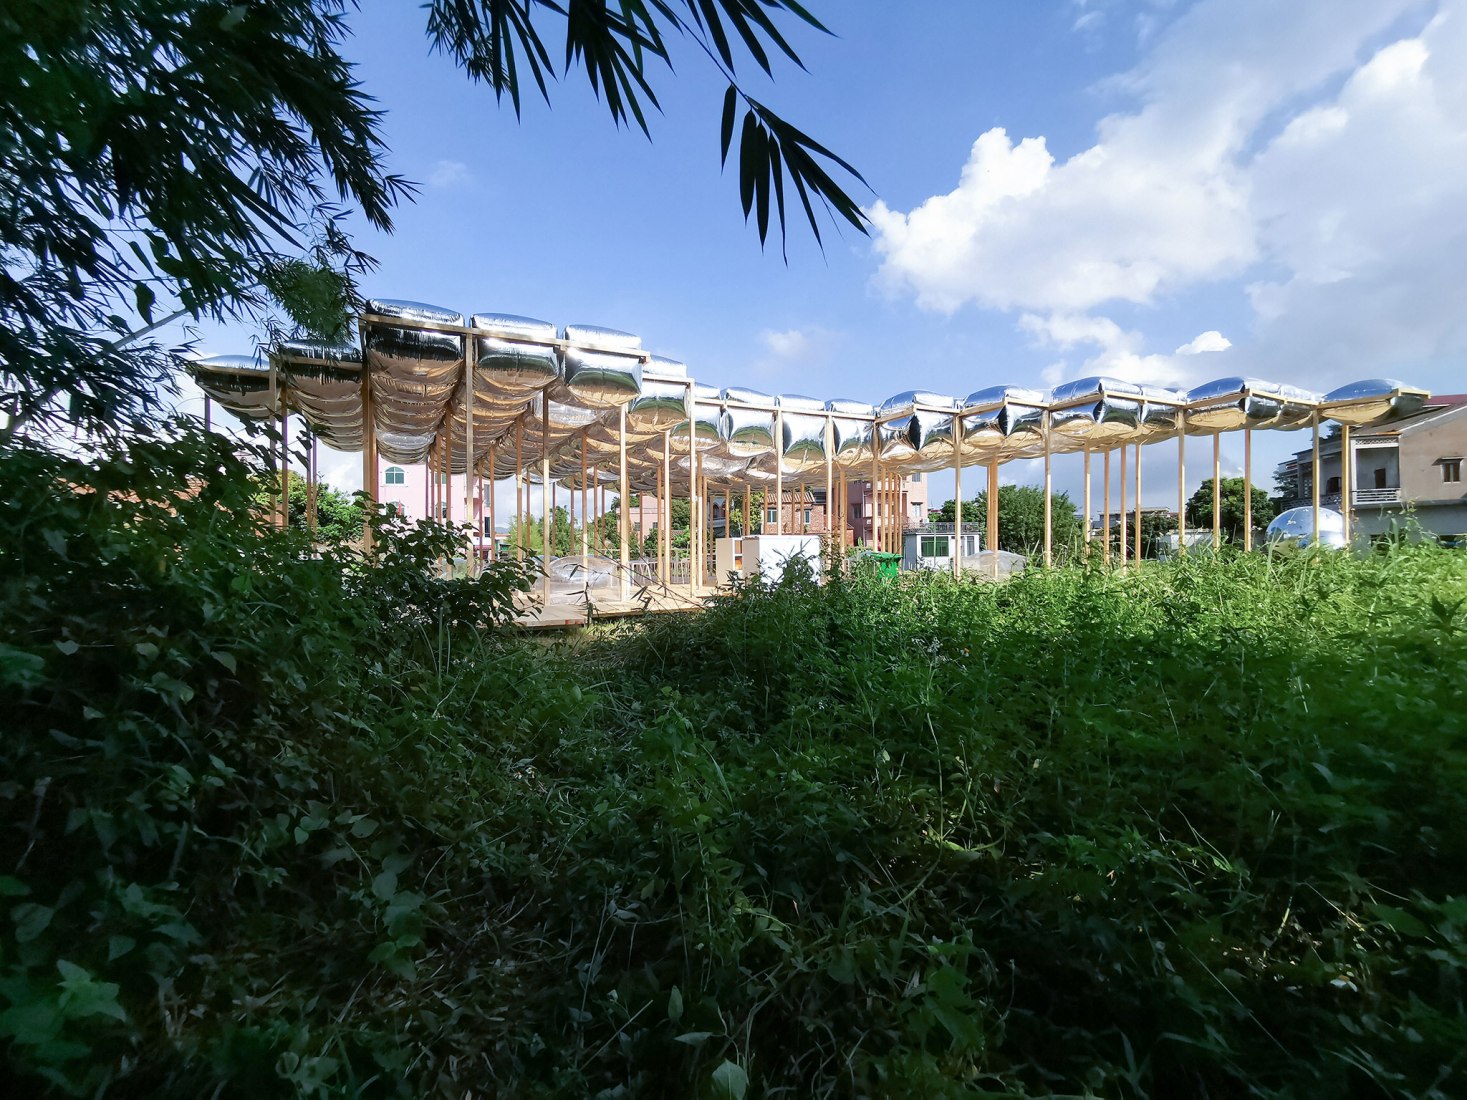 La Alcoba del Té Gulao por Aether Architects. Fotografía por Aether Architects, Racol Creative.